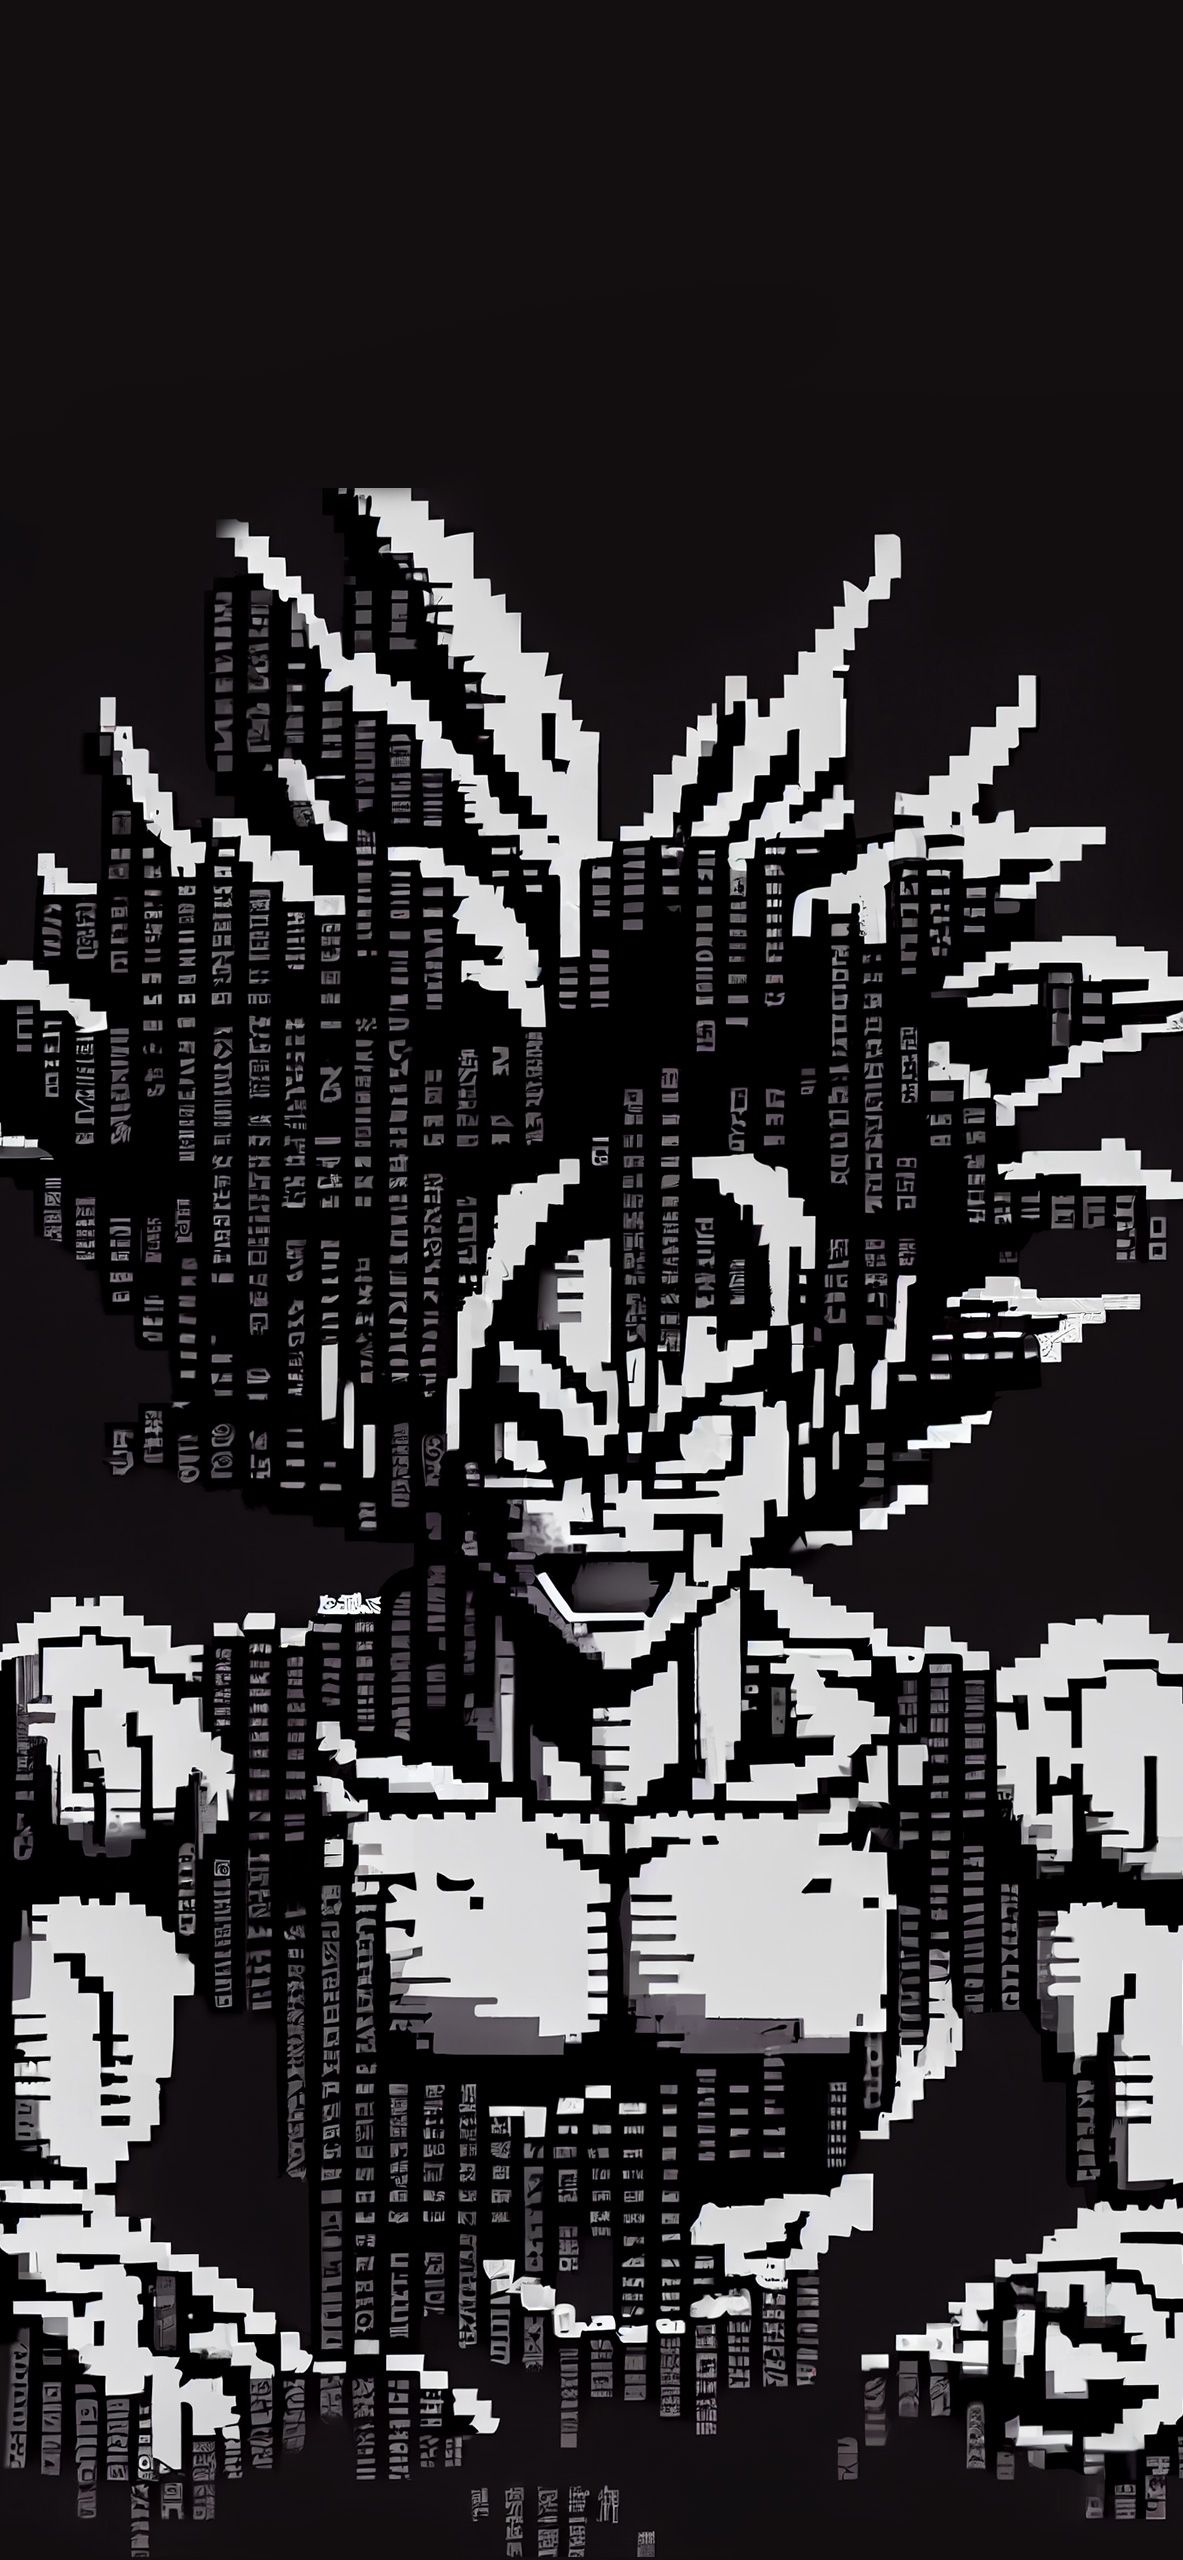 1080x1920 wallpaper of goku from dragon ball z in 8 bit style - Dragon Ball, Goku, pixel art